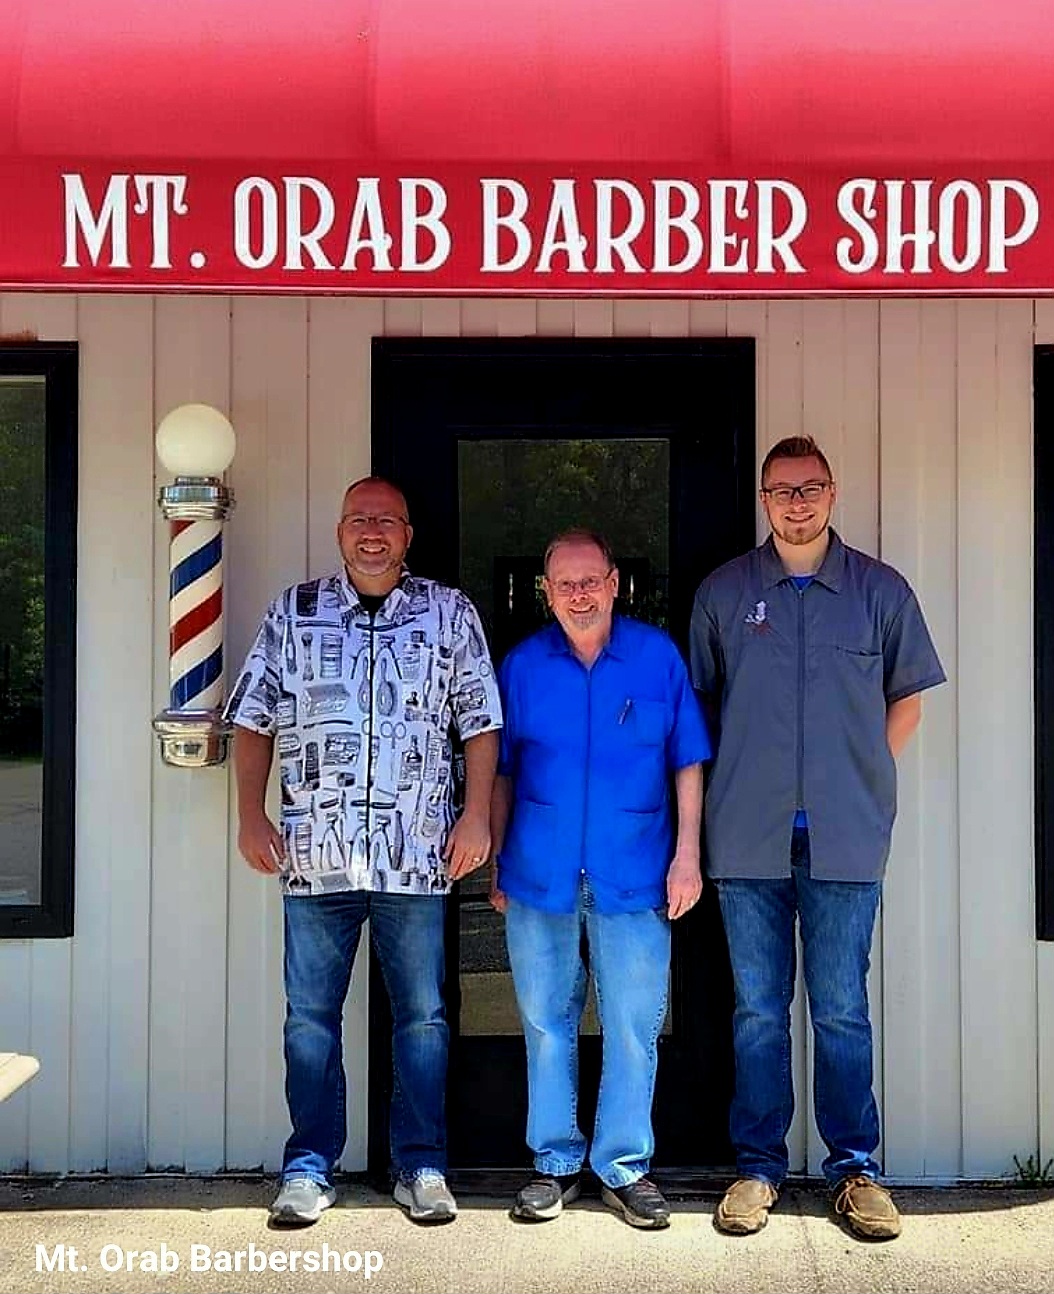 Mt Orab Barber Shop 453 West Main Street, Mt Orab Ohio 45154